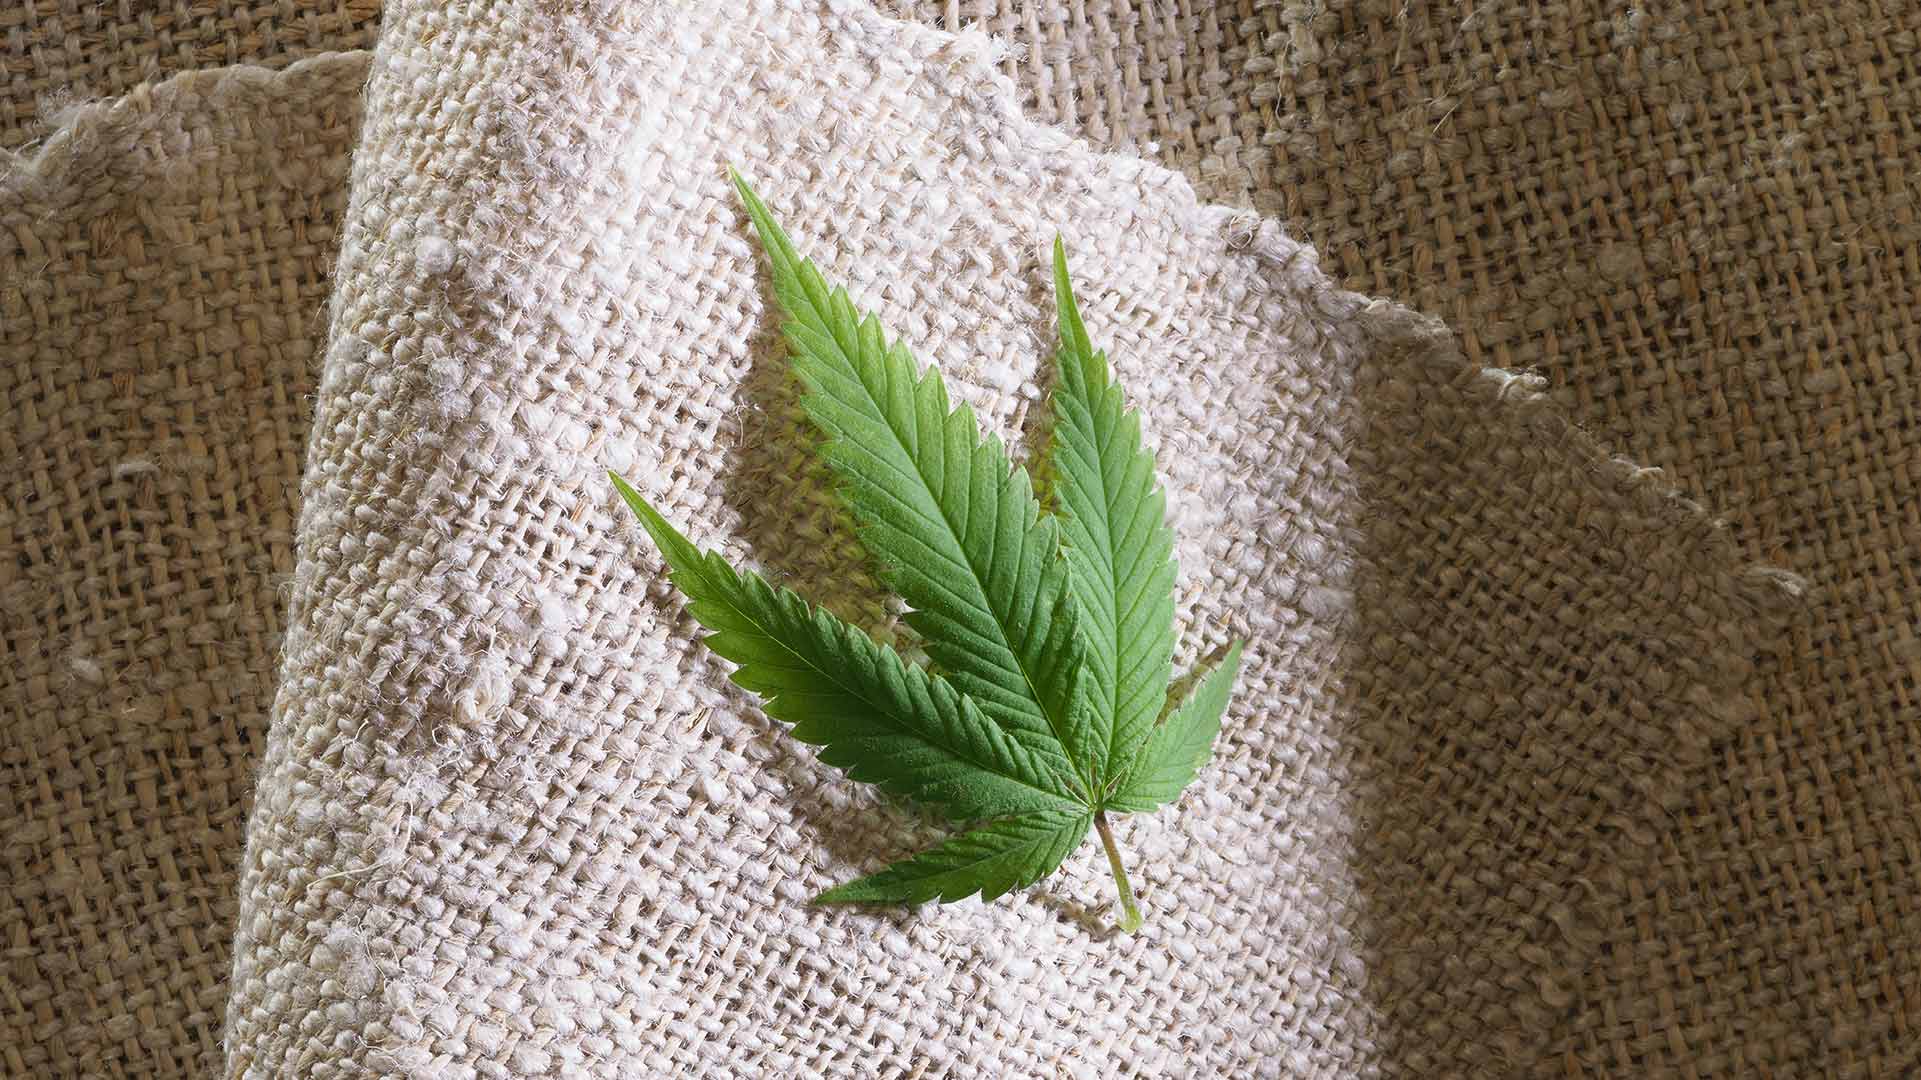 Is Hemp Marijuana?